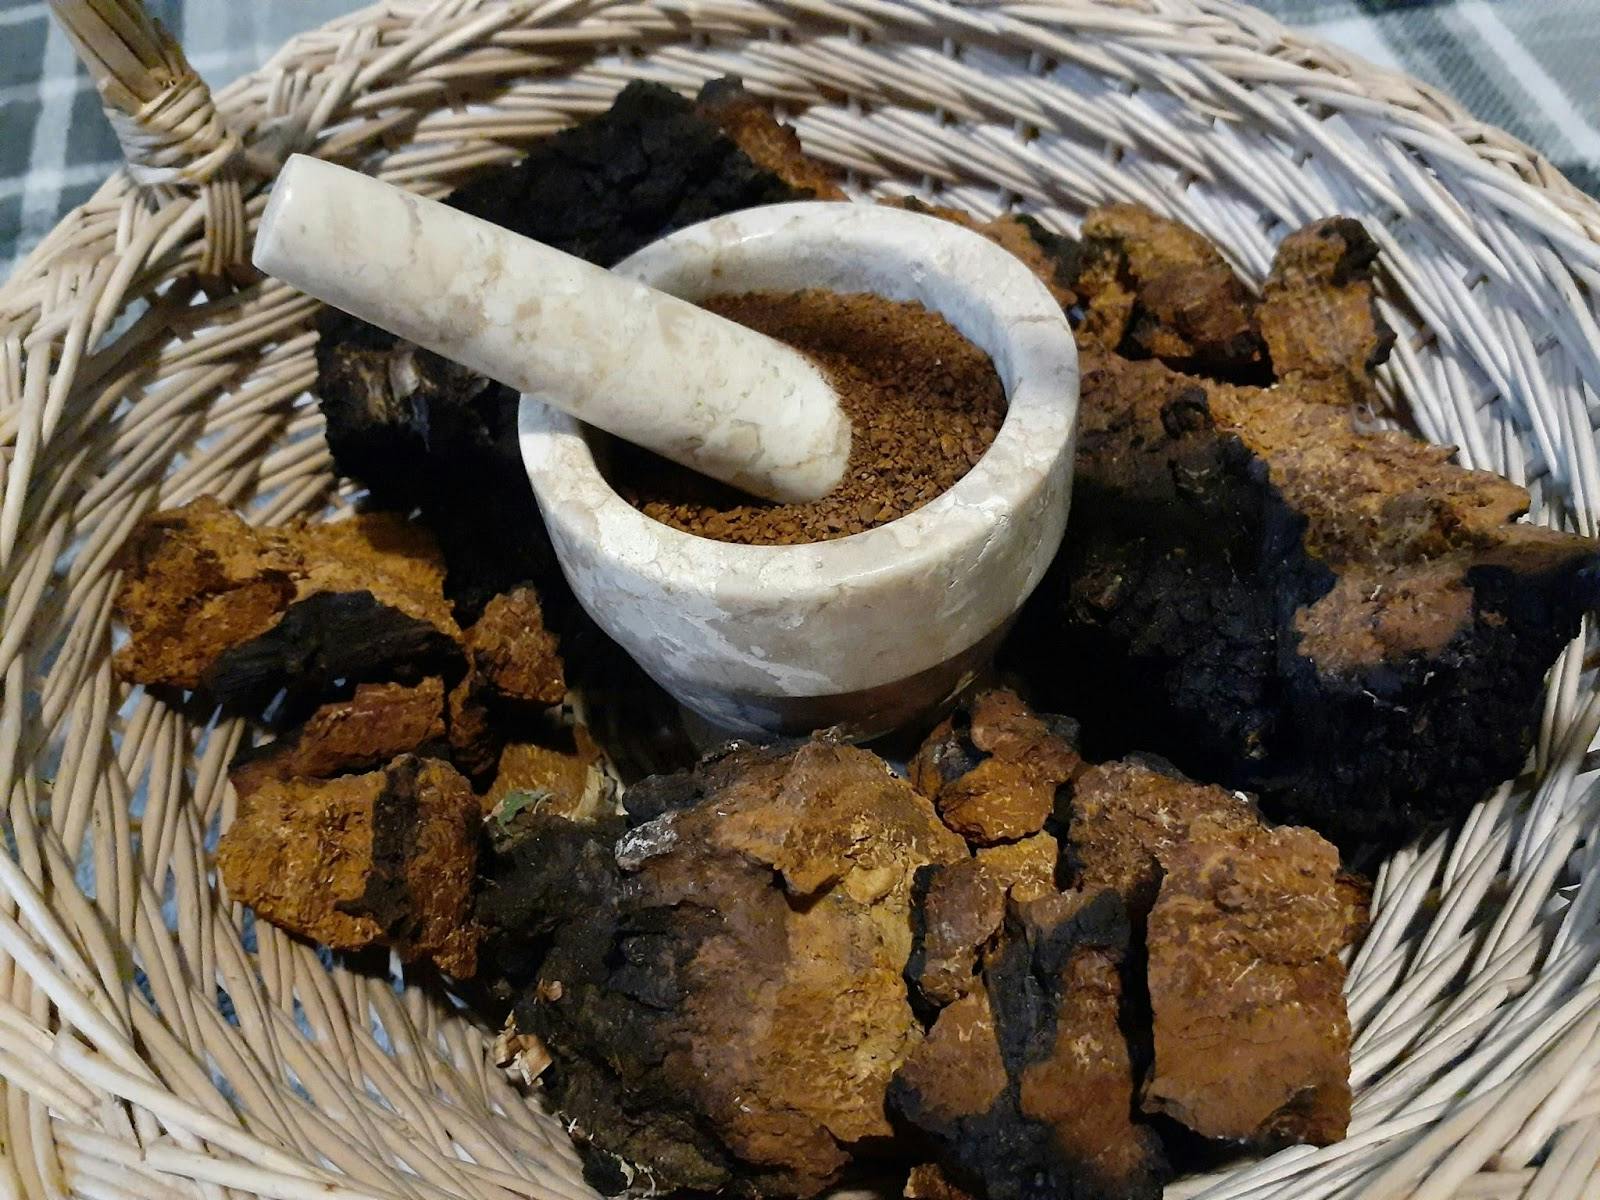 Morel Mushrooms and a  a Grinder Filled with Mushroom powder in a Basket 